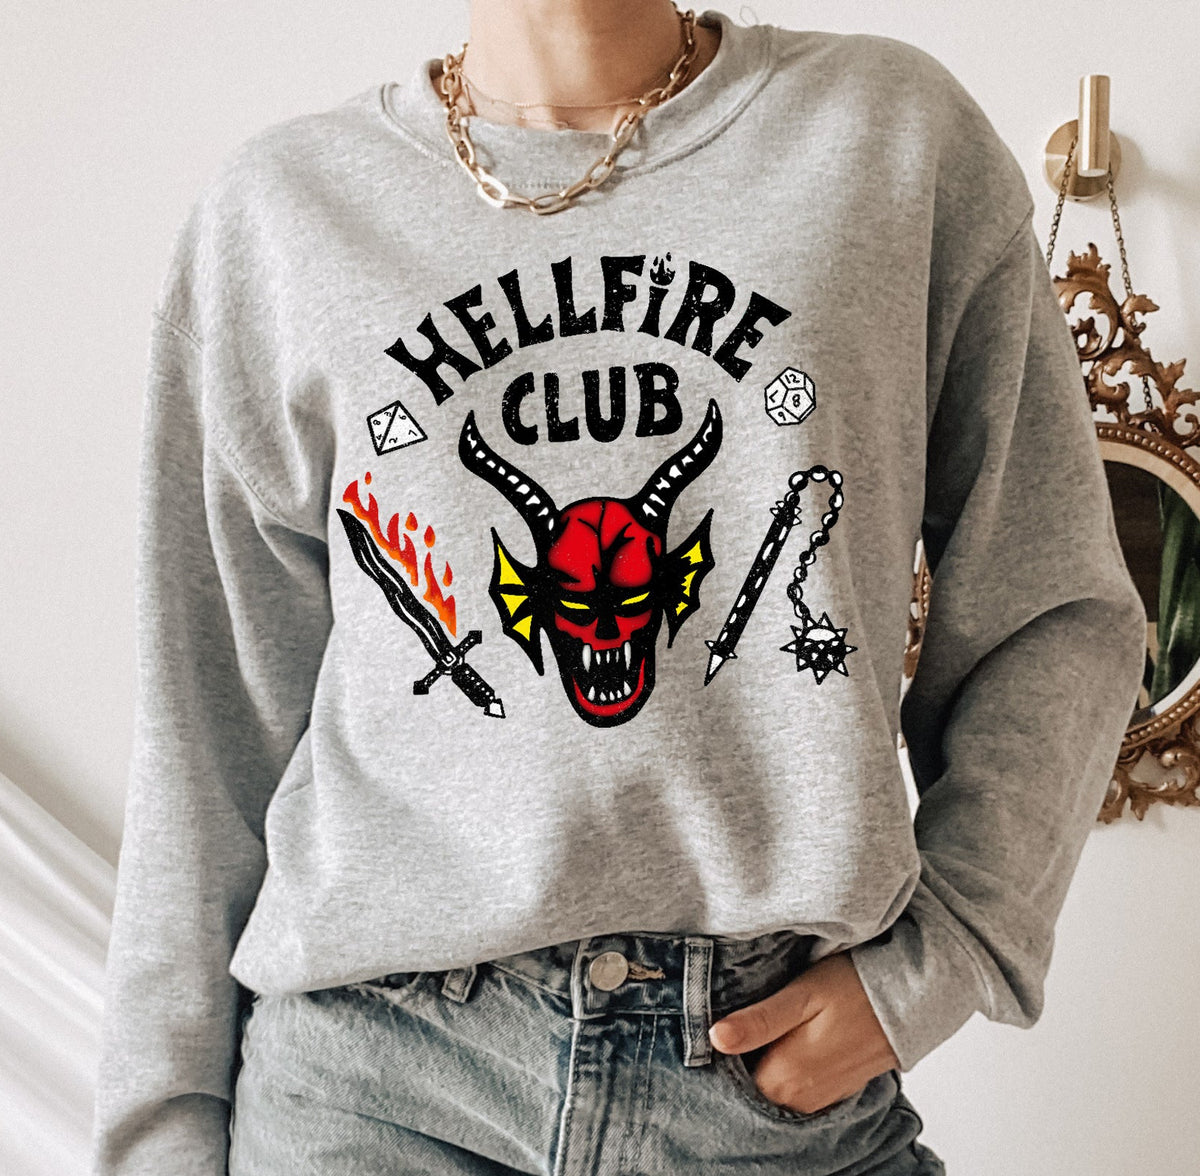 Grey sweater that says hellfire club - HighCiti